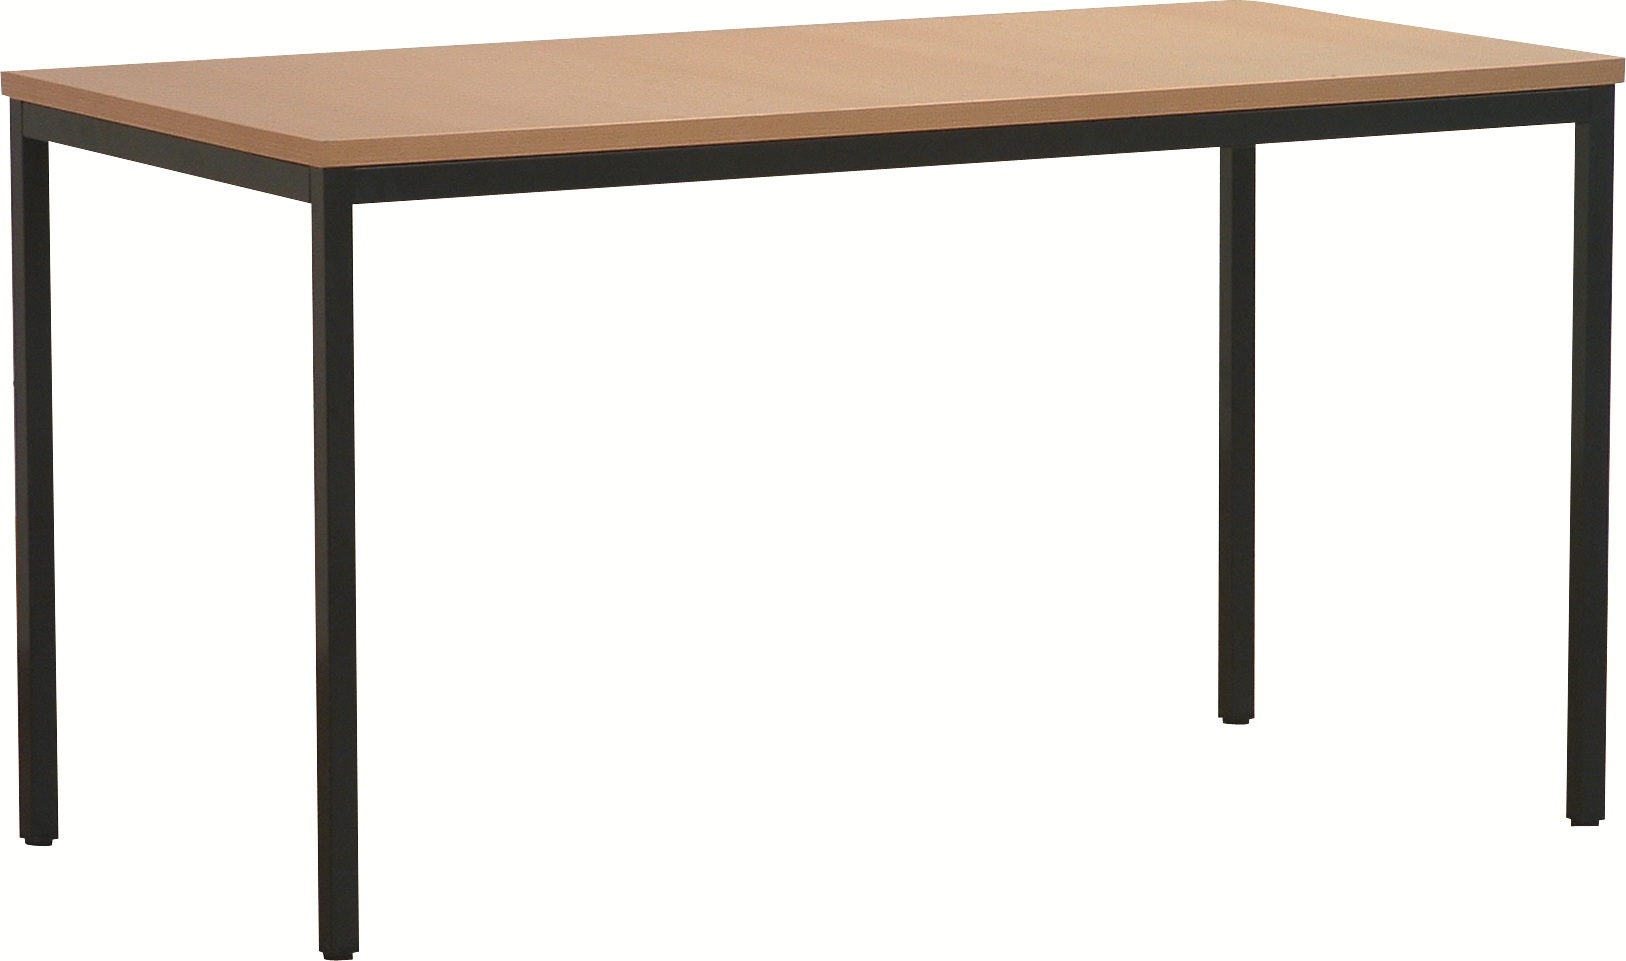 Simpli multifunctionele tafel cm | office